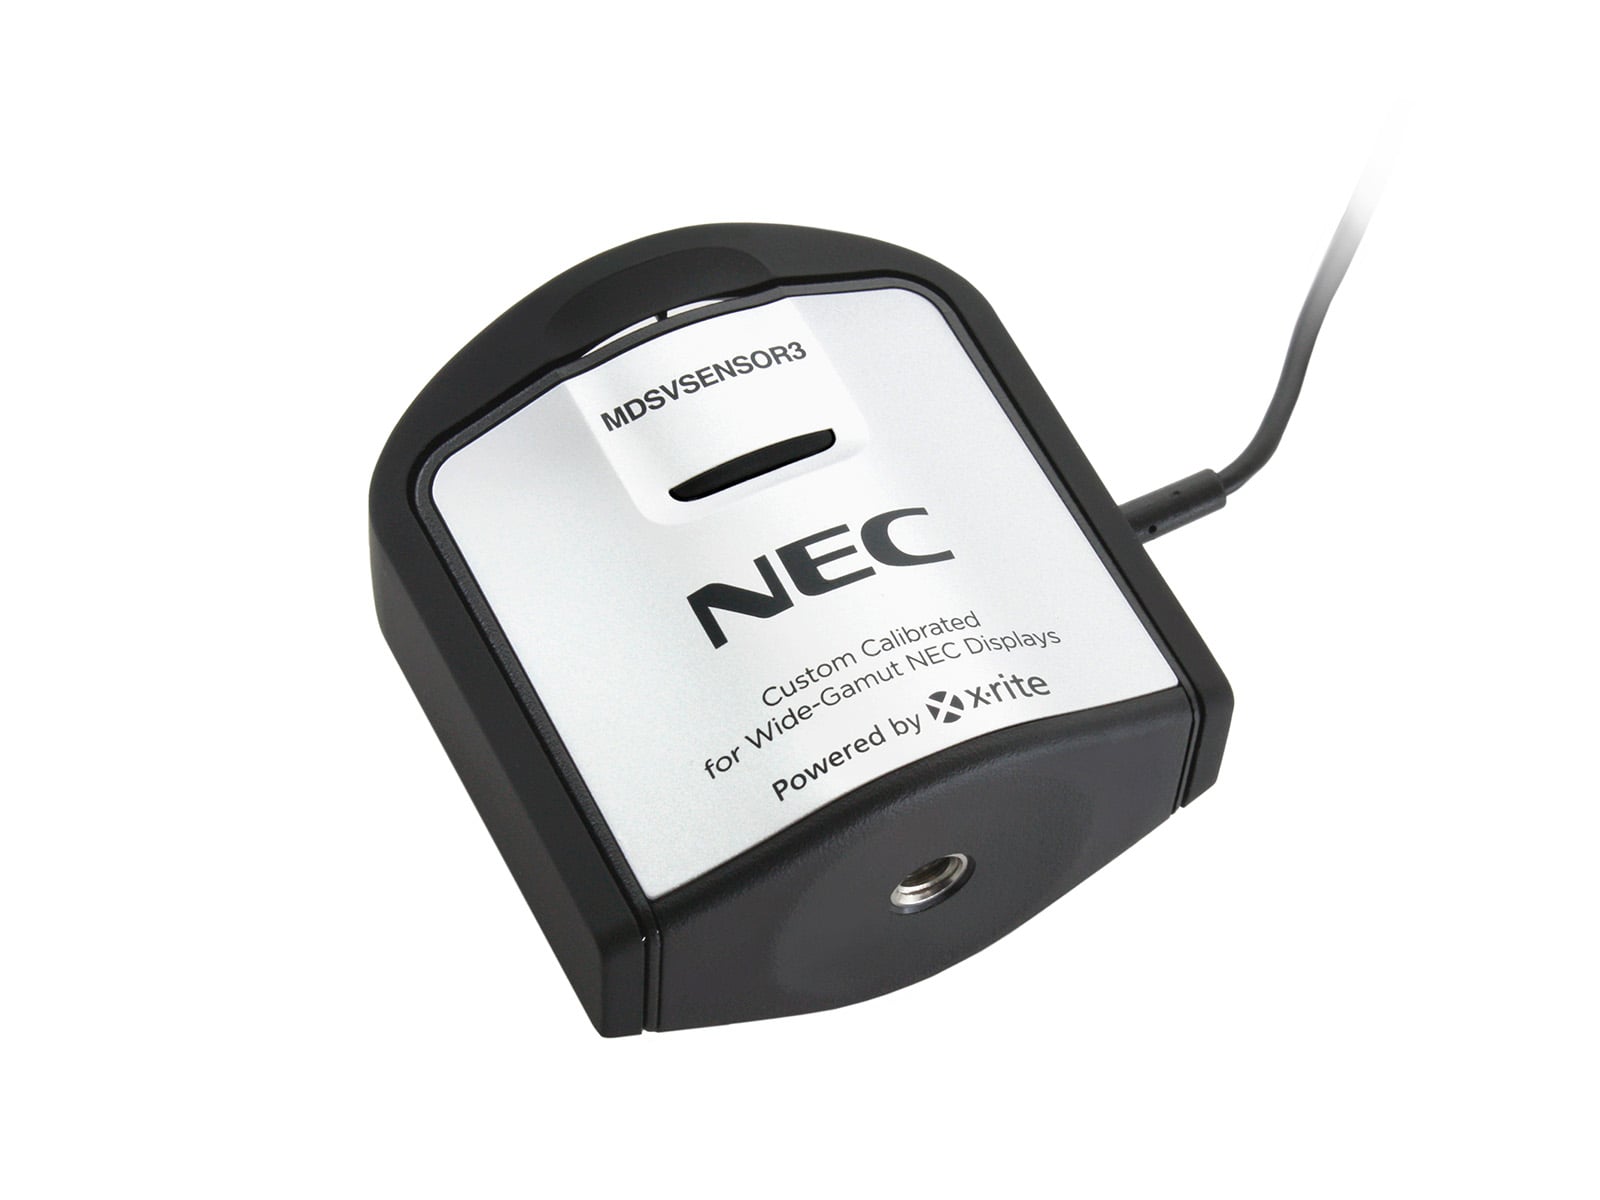 NEC SpectraSensor Pro カラー医療用ディスプレイ キャリブレーション センサー (MDSVSENSOR3) Monitors.com